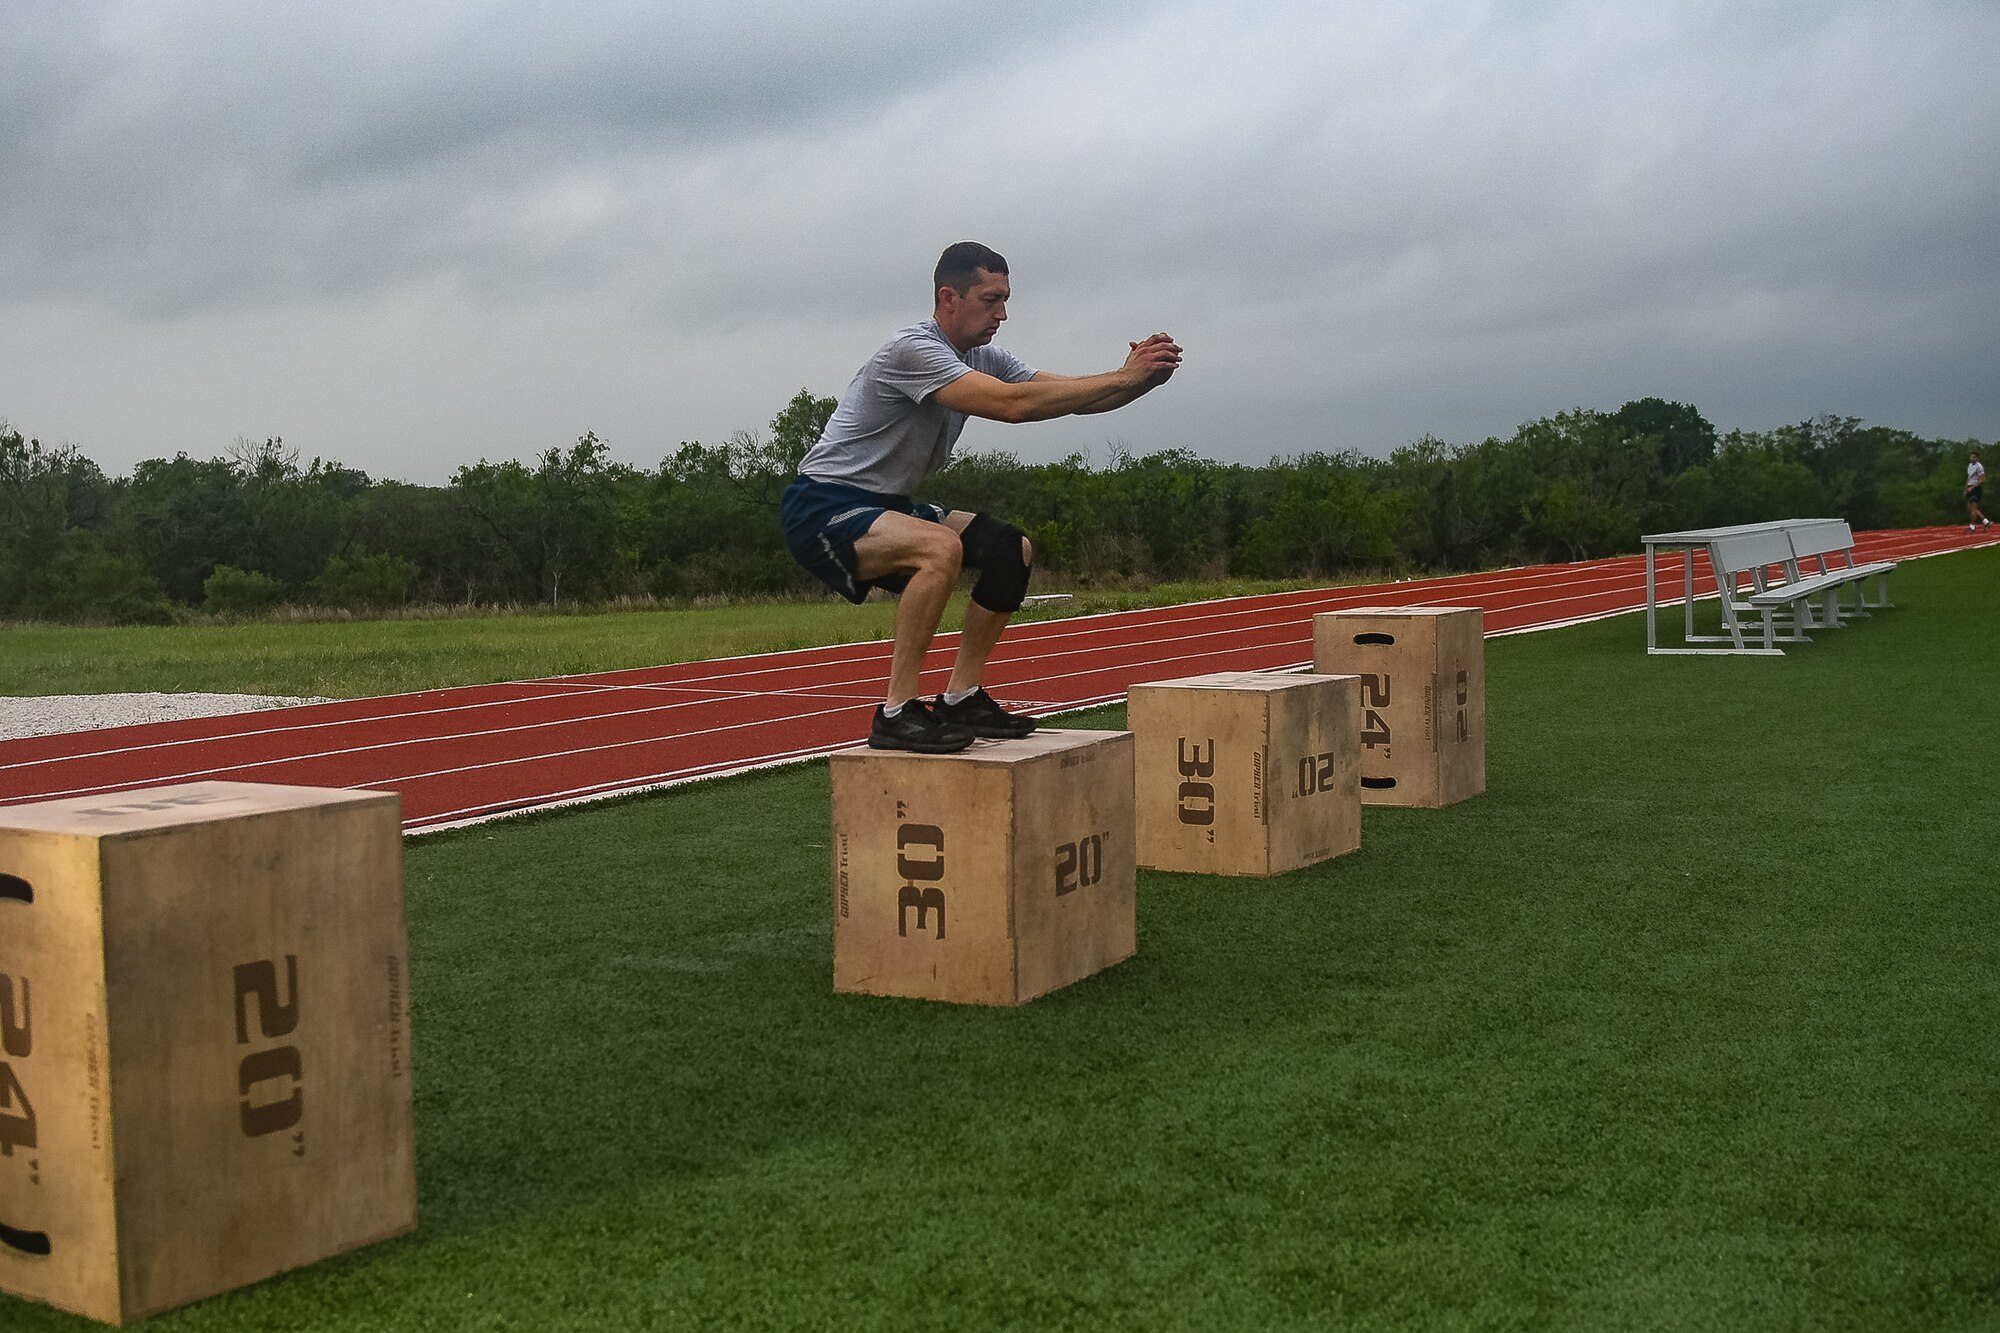 Airman performs box jump exercises.